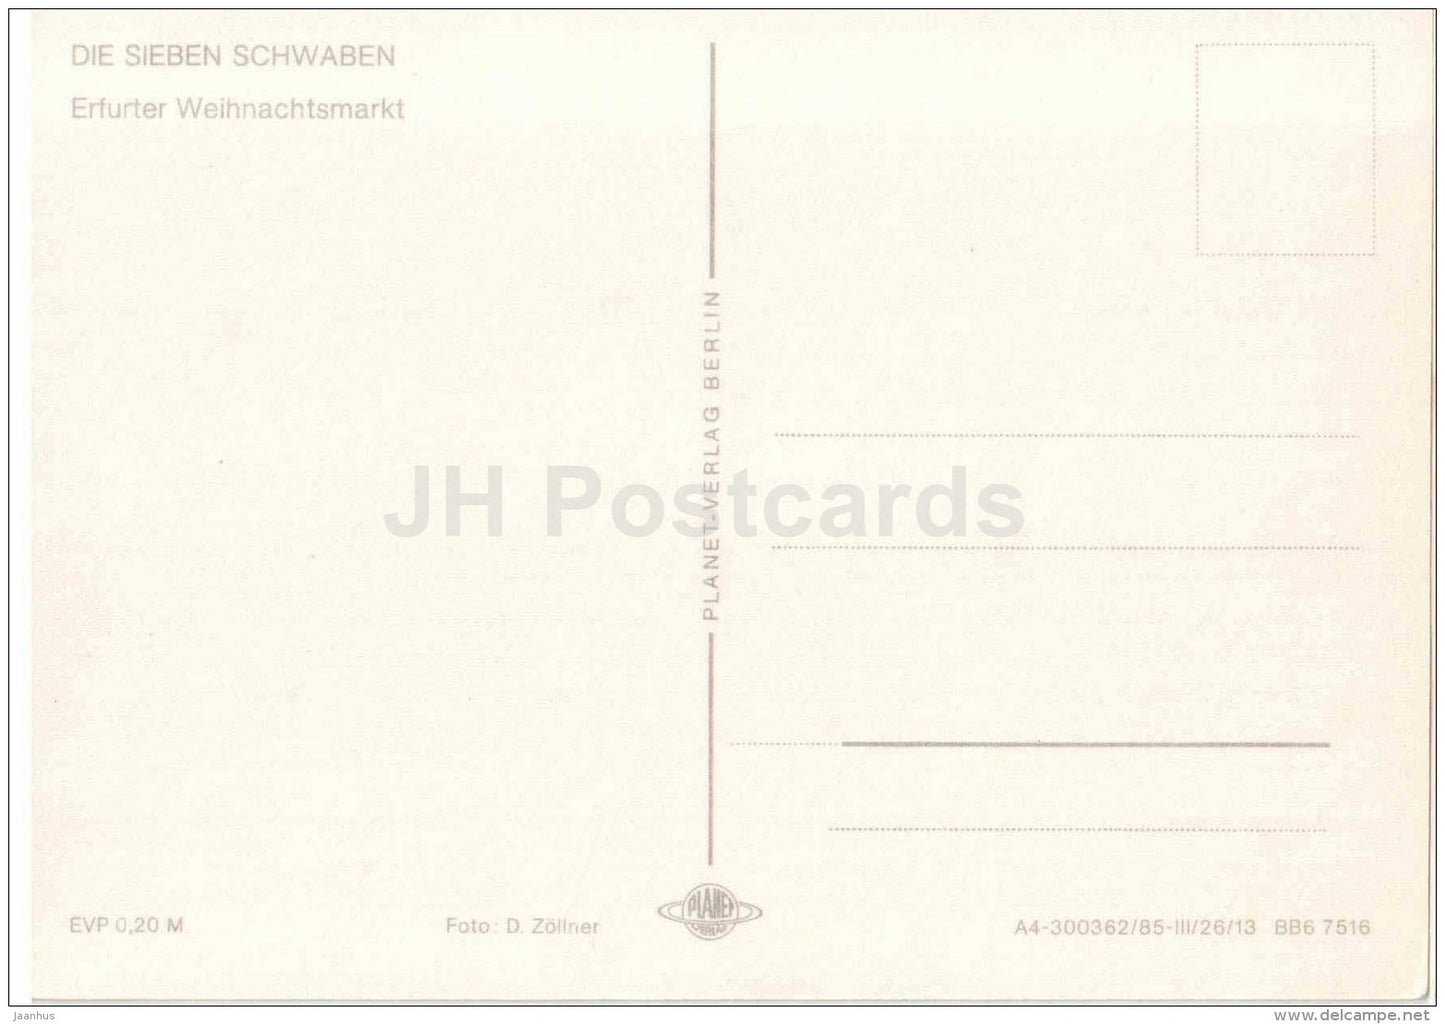 Die Sieben Schwaben - The Seven Swabians - Märchen - Fairy Tale - Germany - unused - JH Postcards